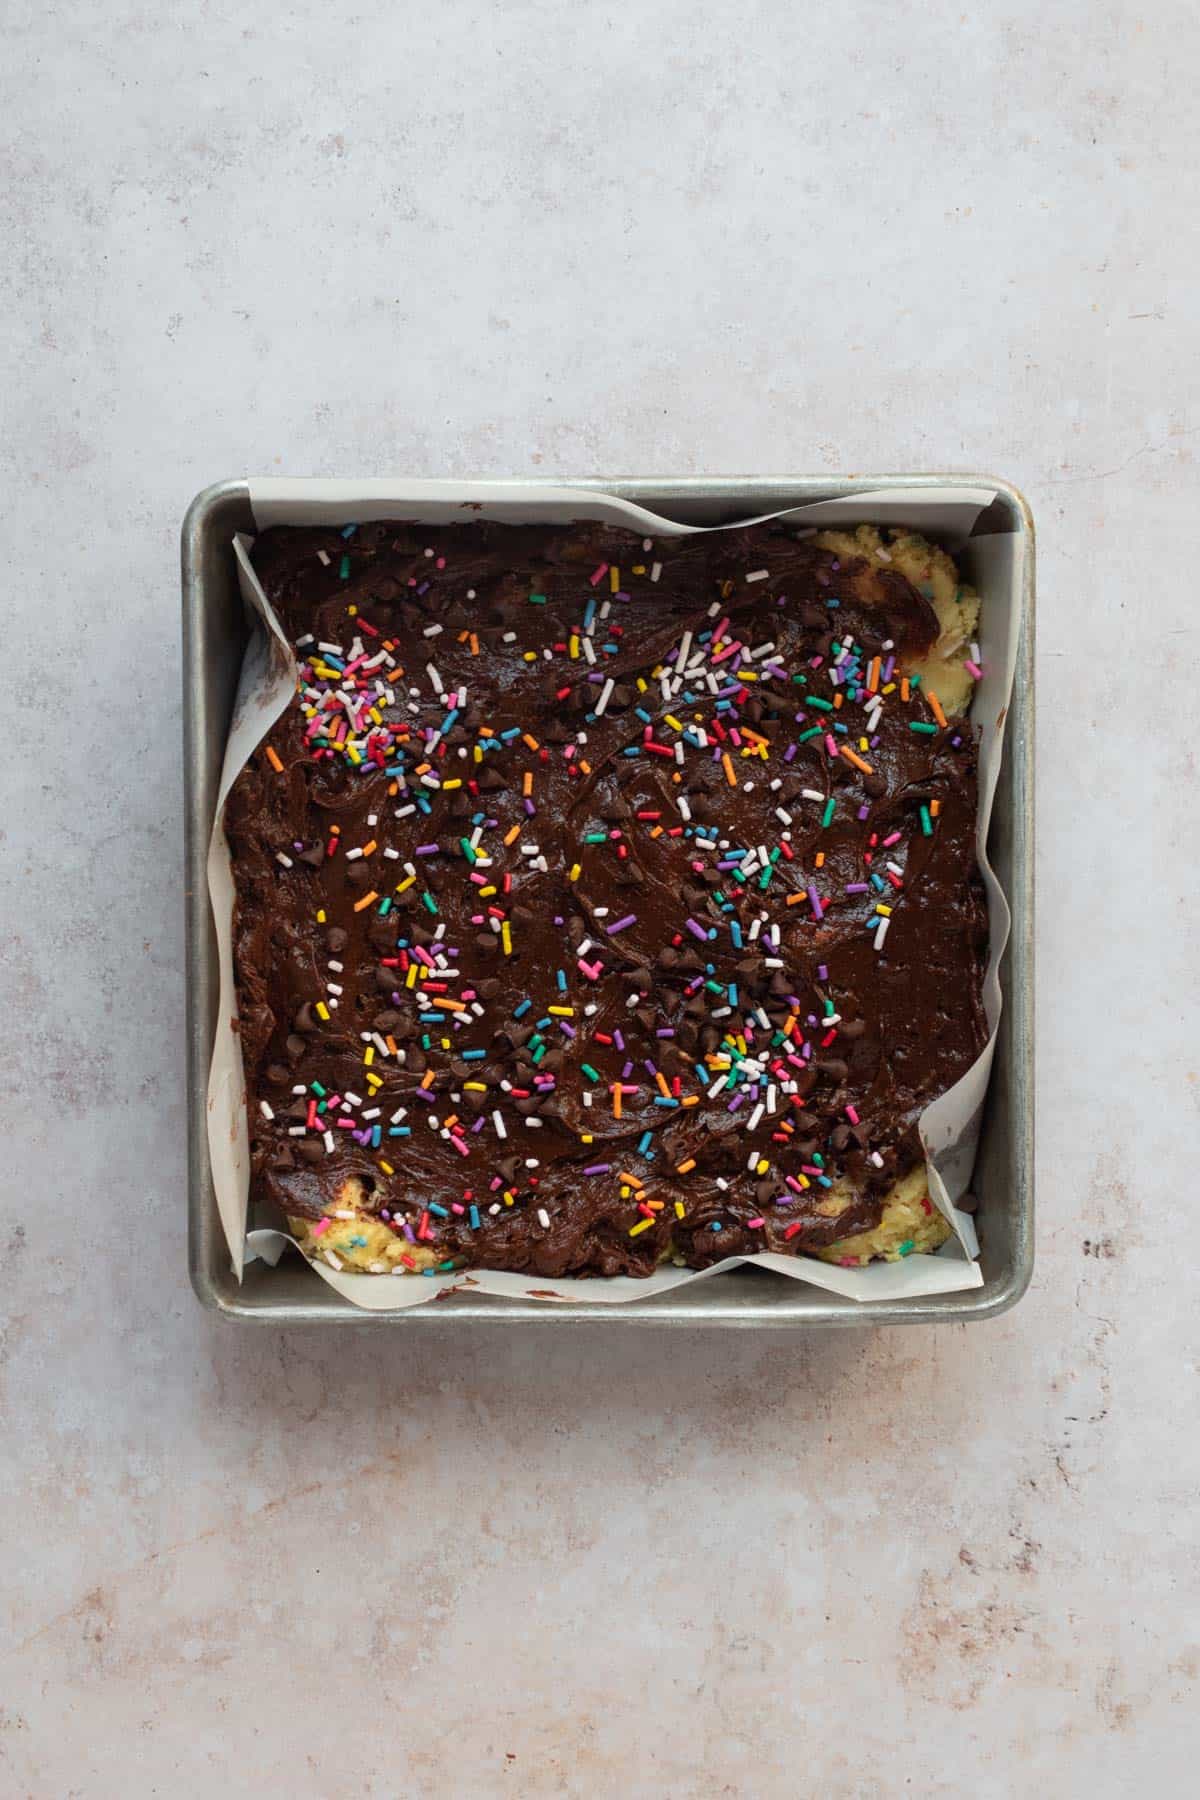 Baking pan with birthday cake brownie batter.